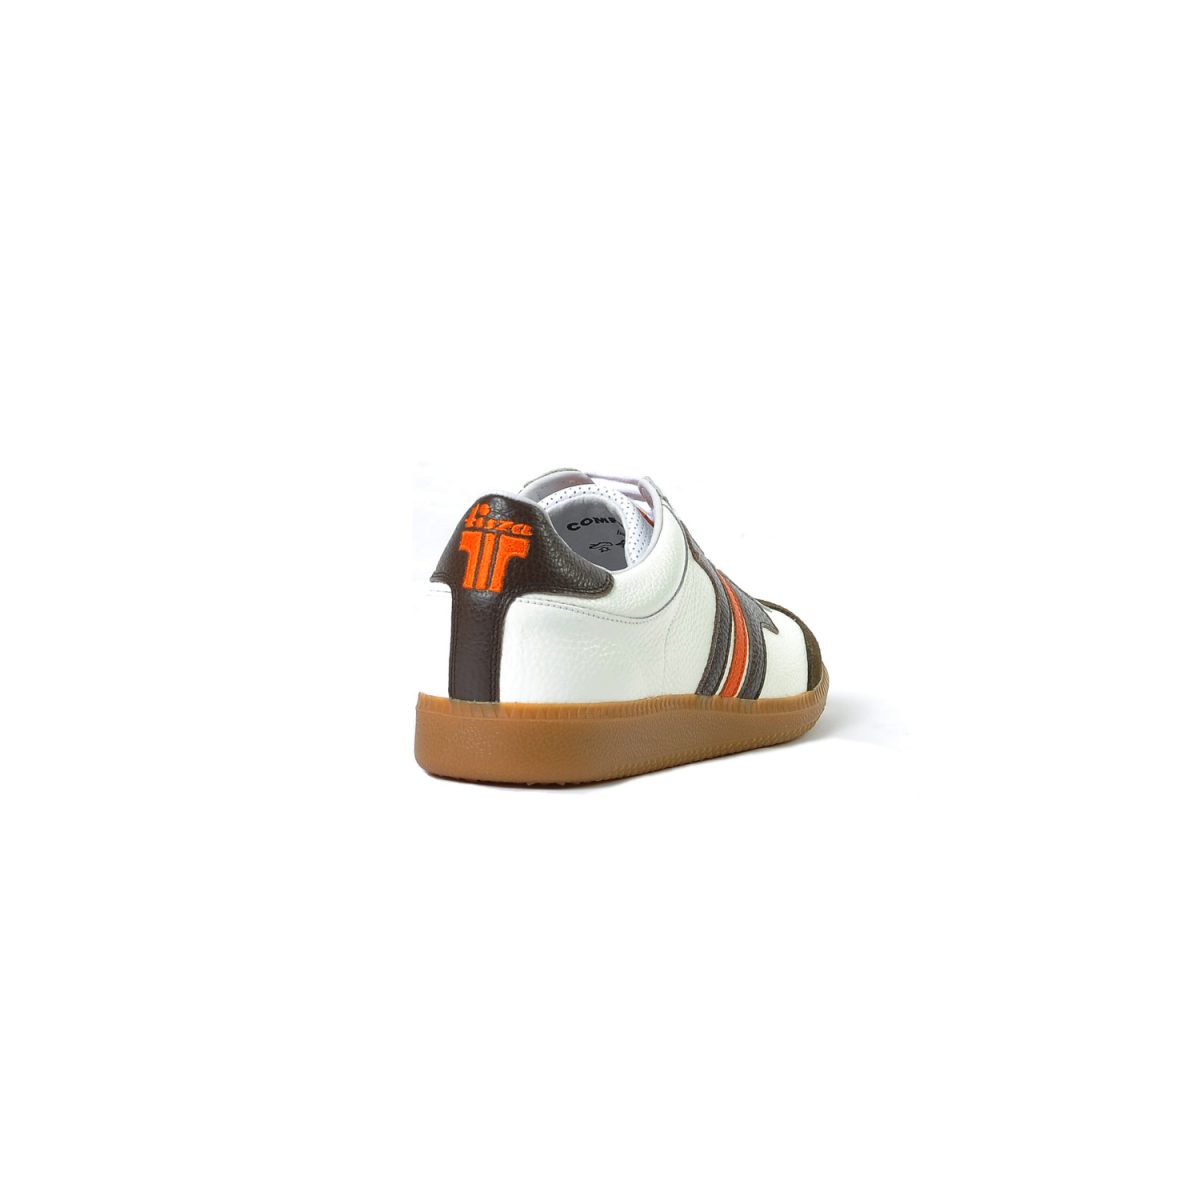 Tisza shoes - Compakt - White-brown-orange